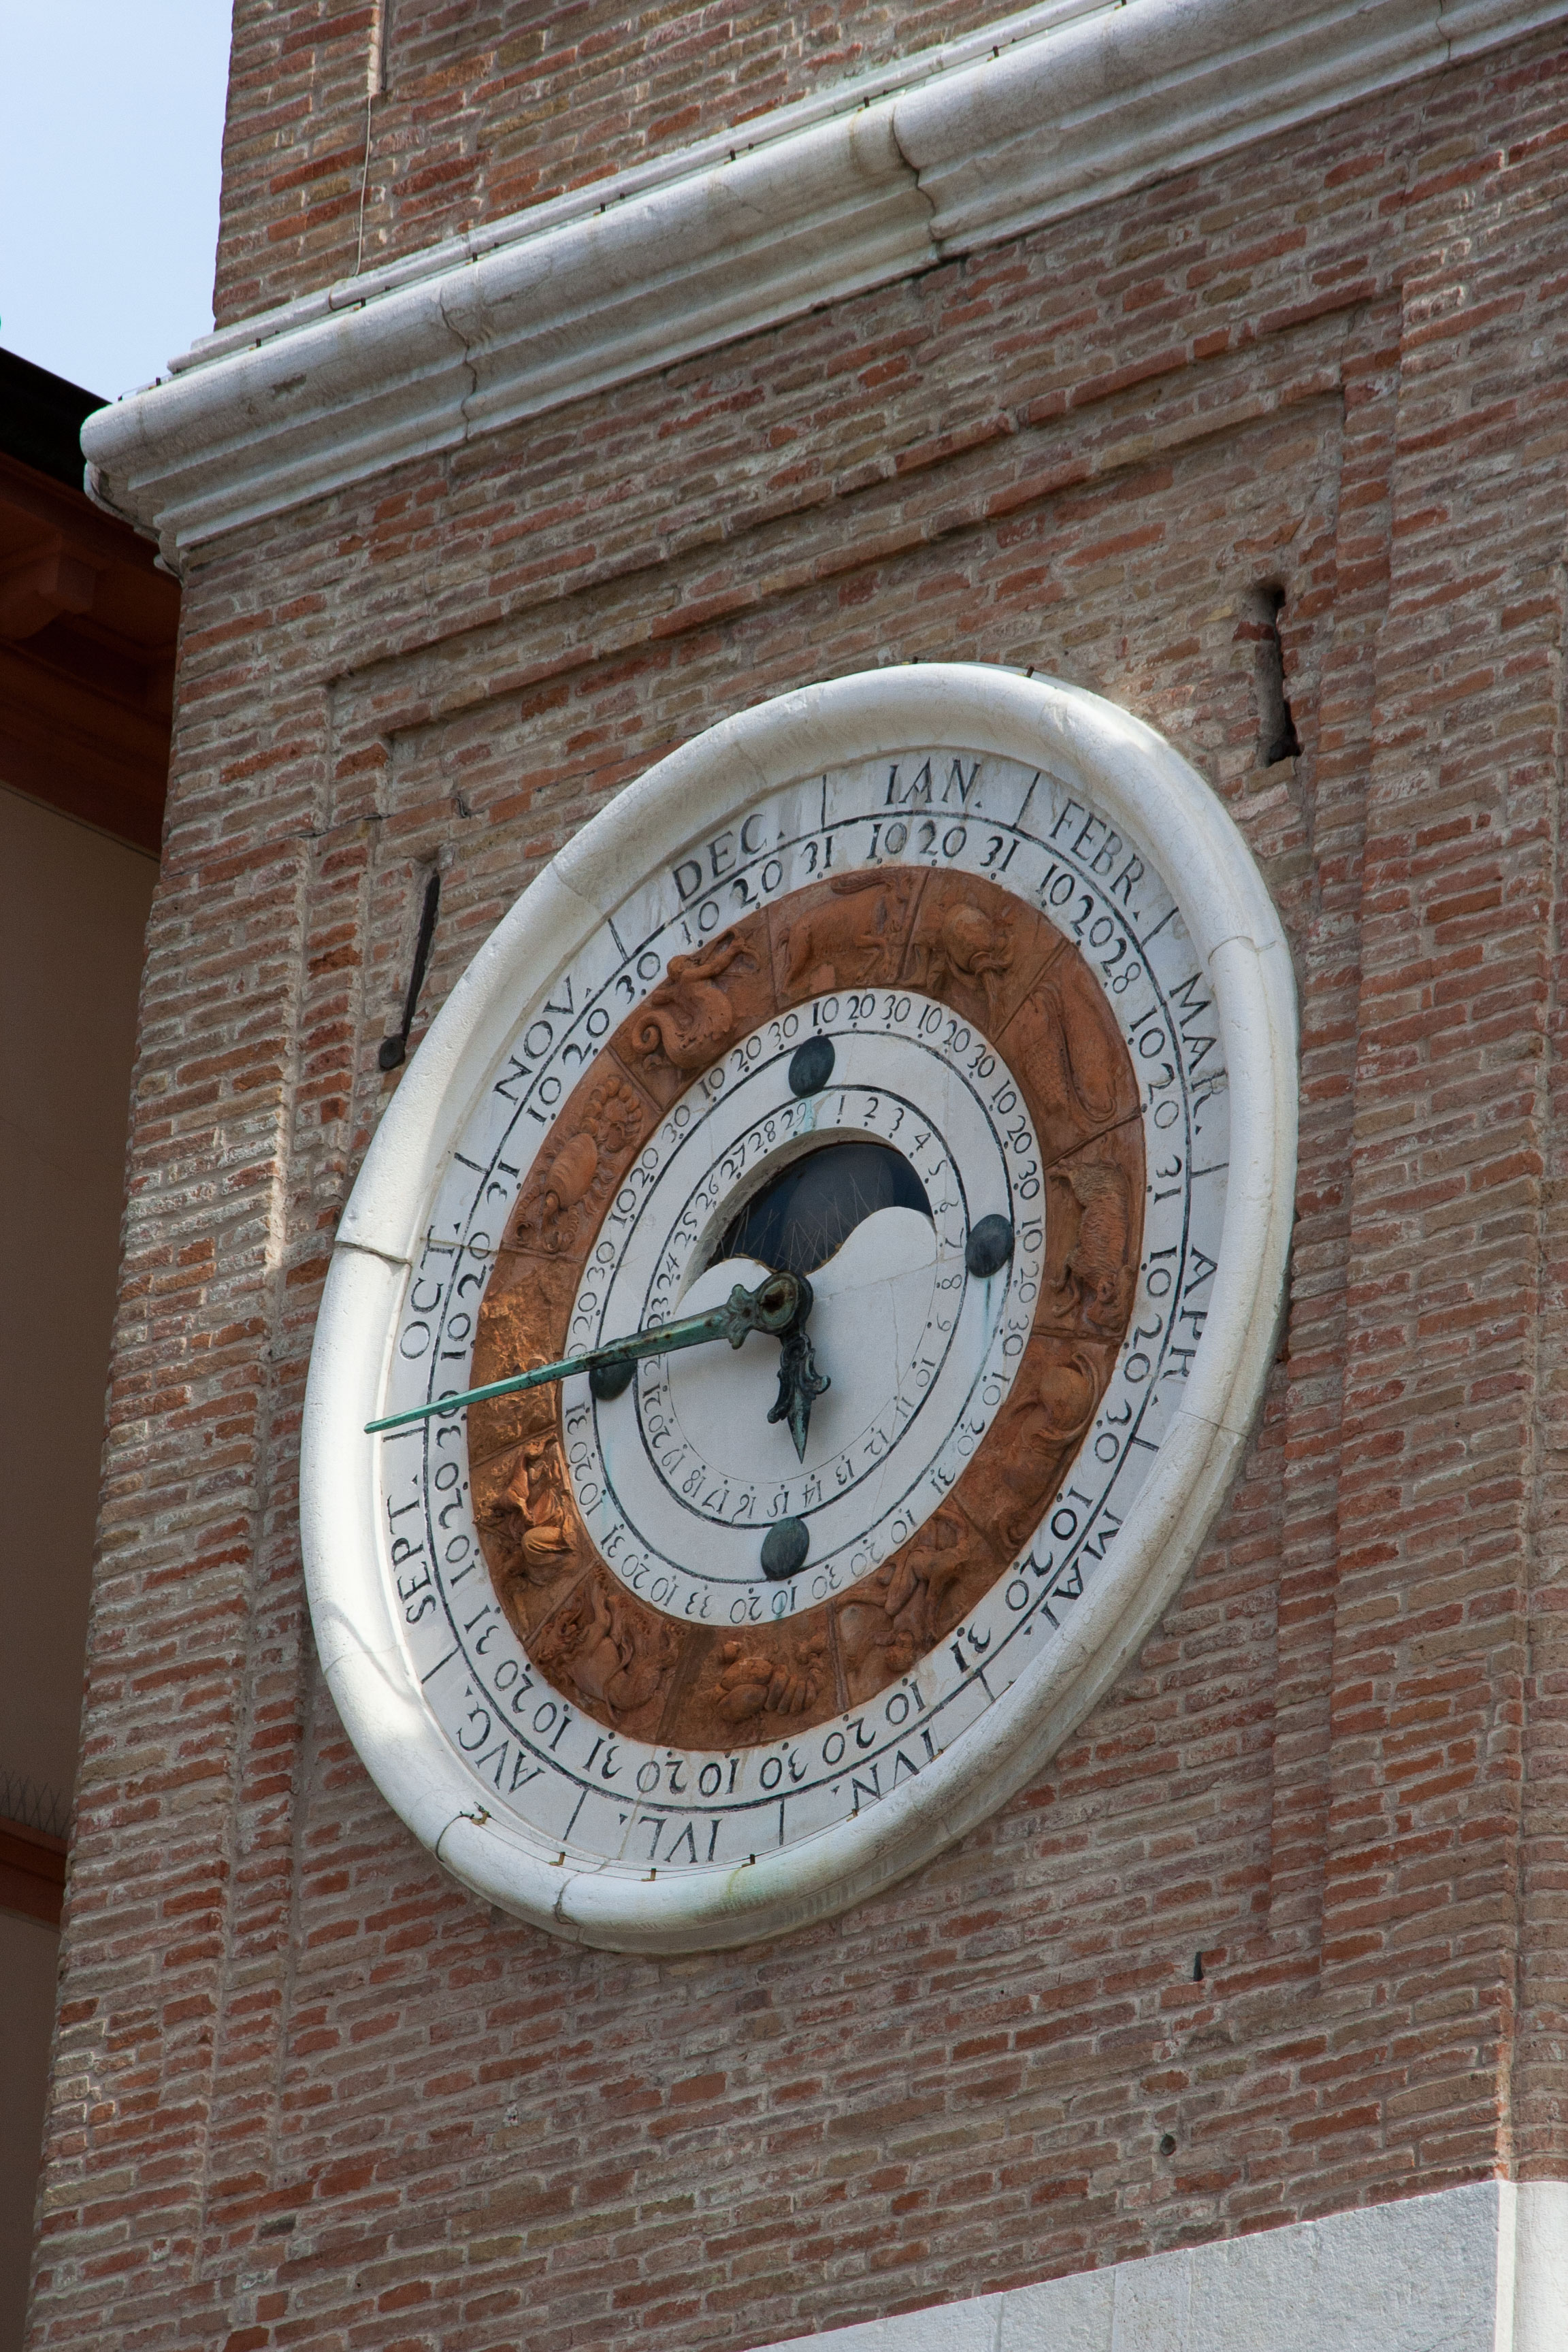 photo: https://upload.wikimedia.org/wikipedia/commons/5/58/Torre-dellorologio-rimini-01.jpg